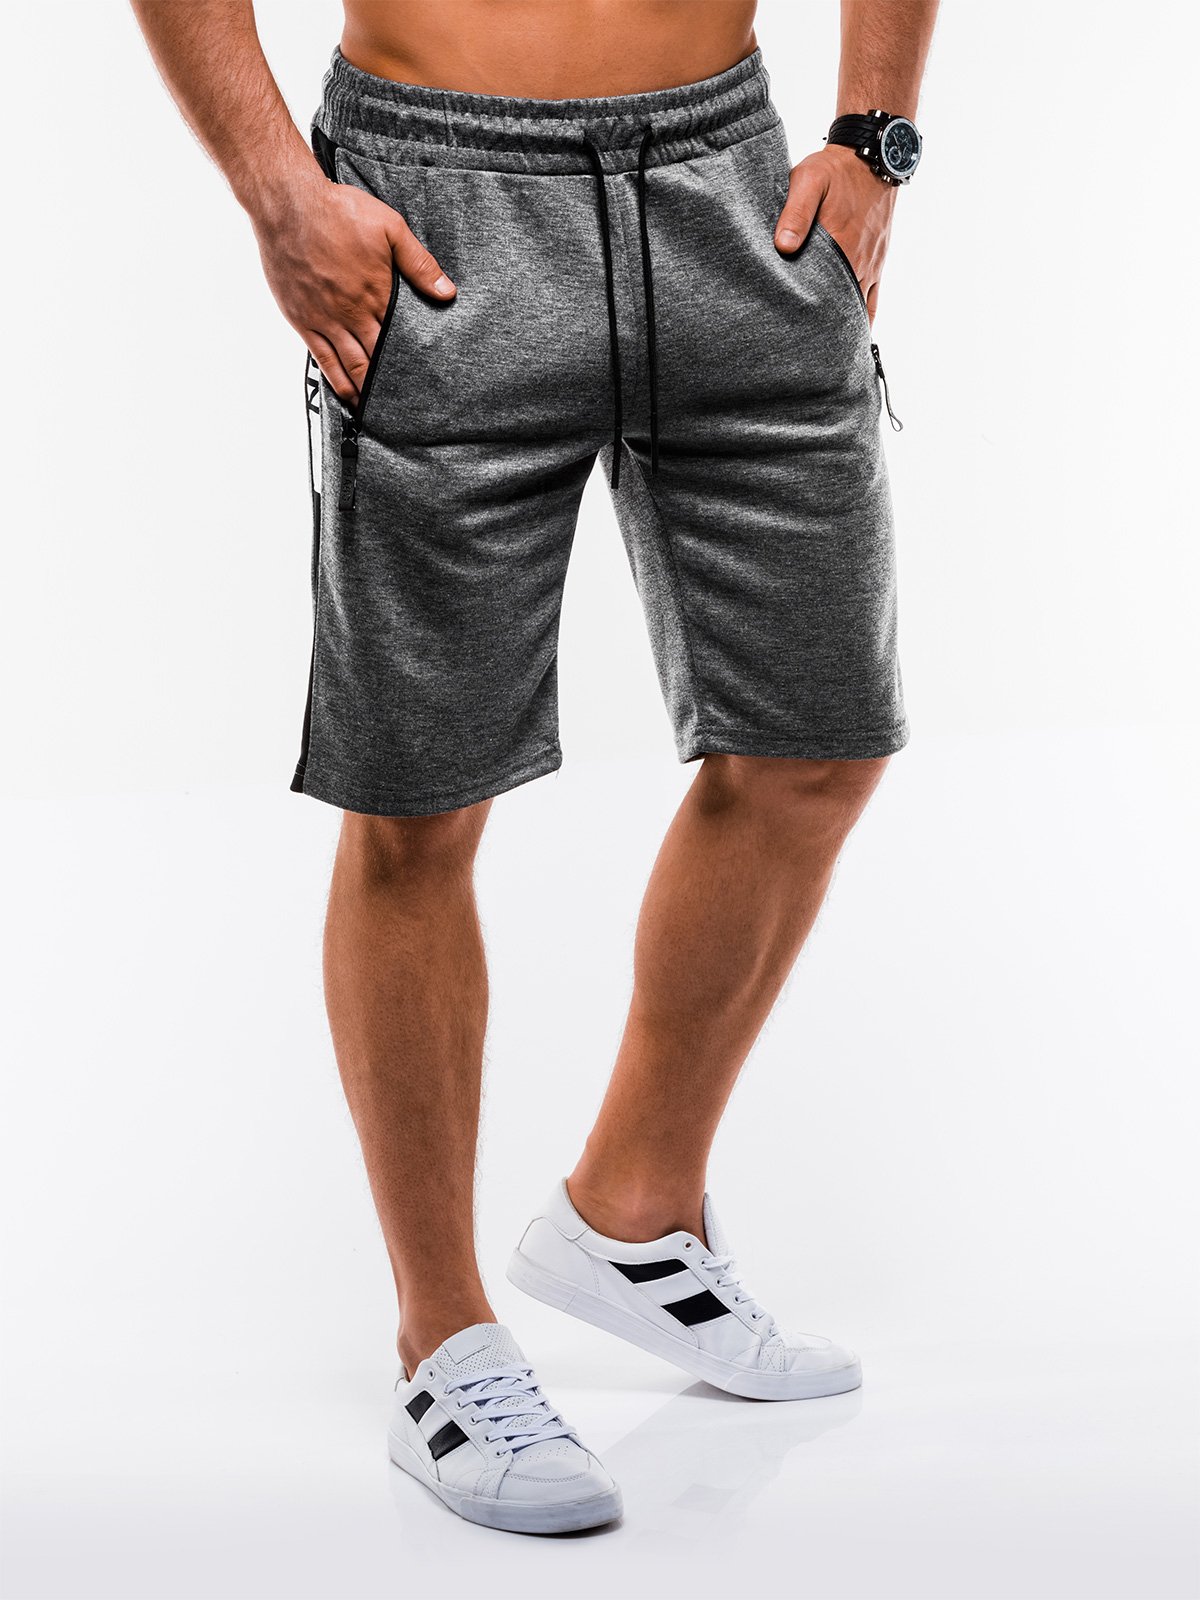 Men's sweatshorts W203 - grey | MODONE wholesale - Clothing For Men